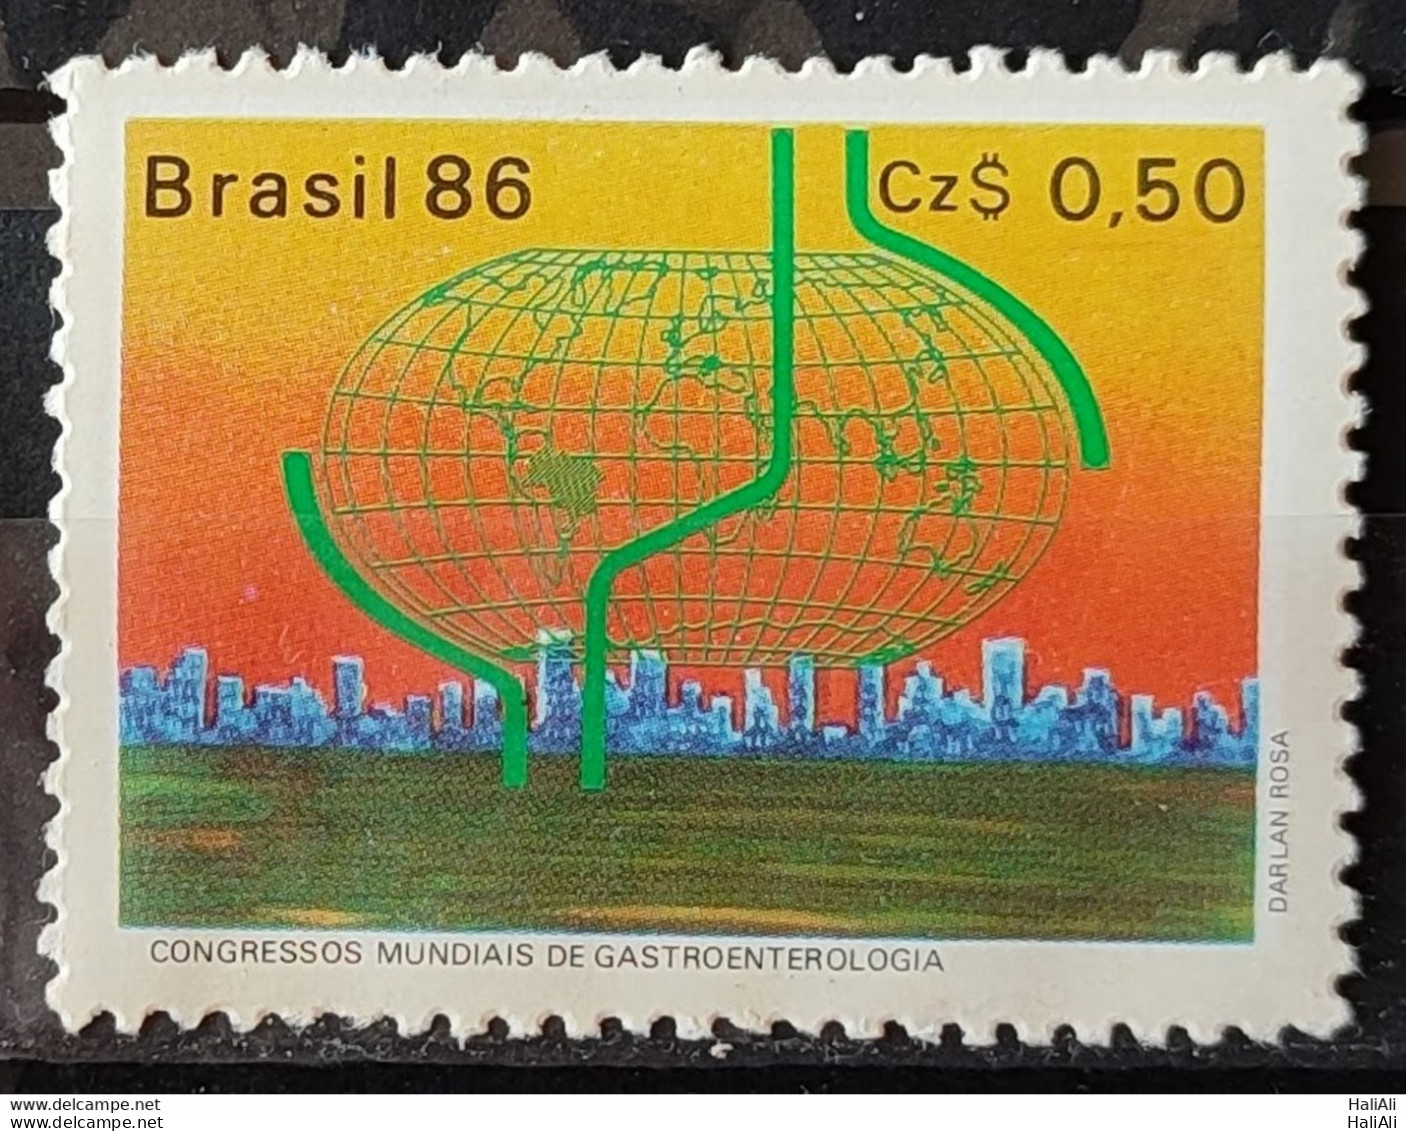 C 1520 Brazil Stamp Congress Of Gastroenterology Health 1986.jpg - Unused Stamps